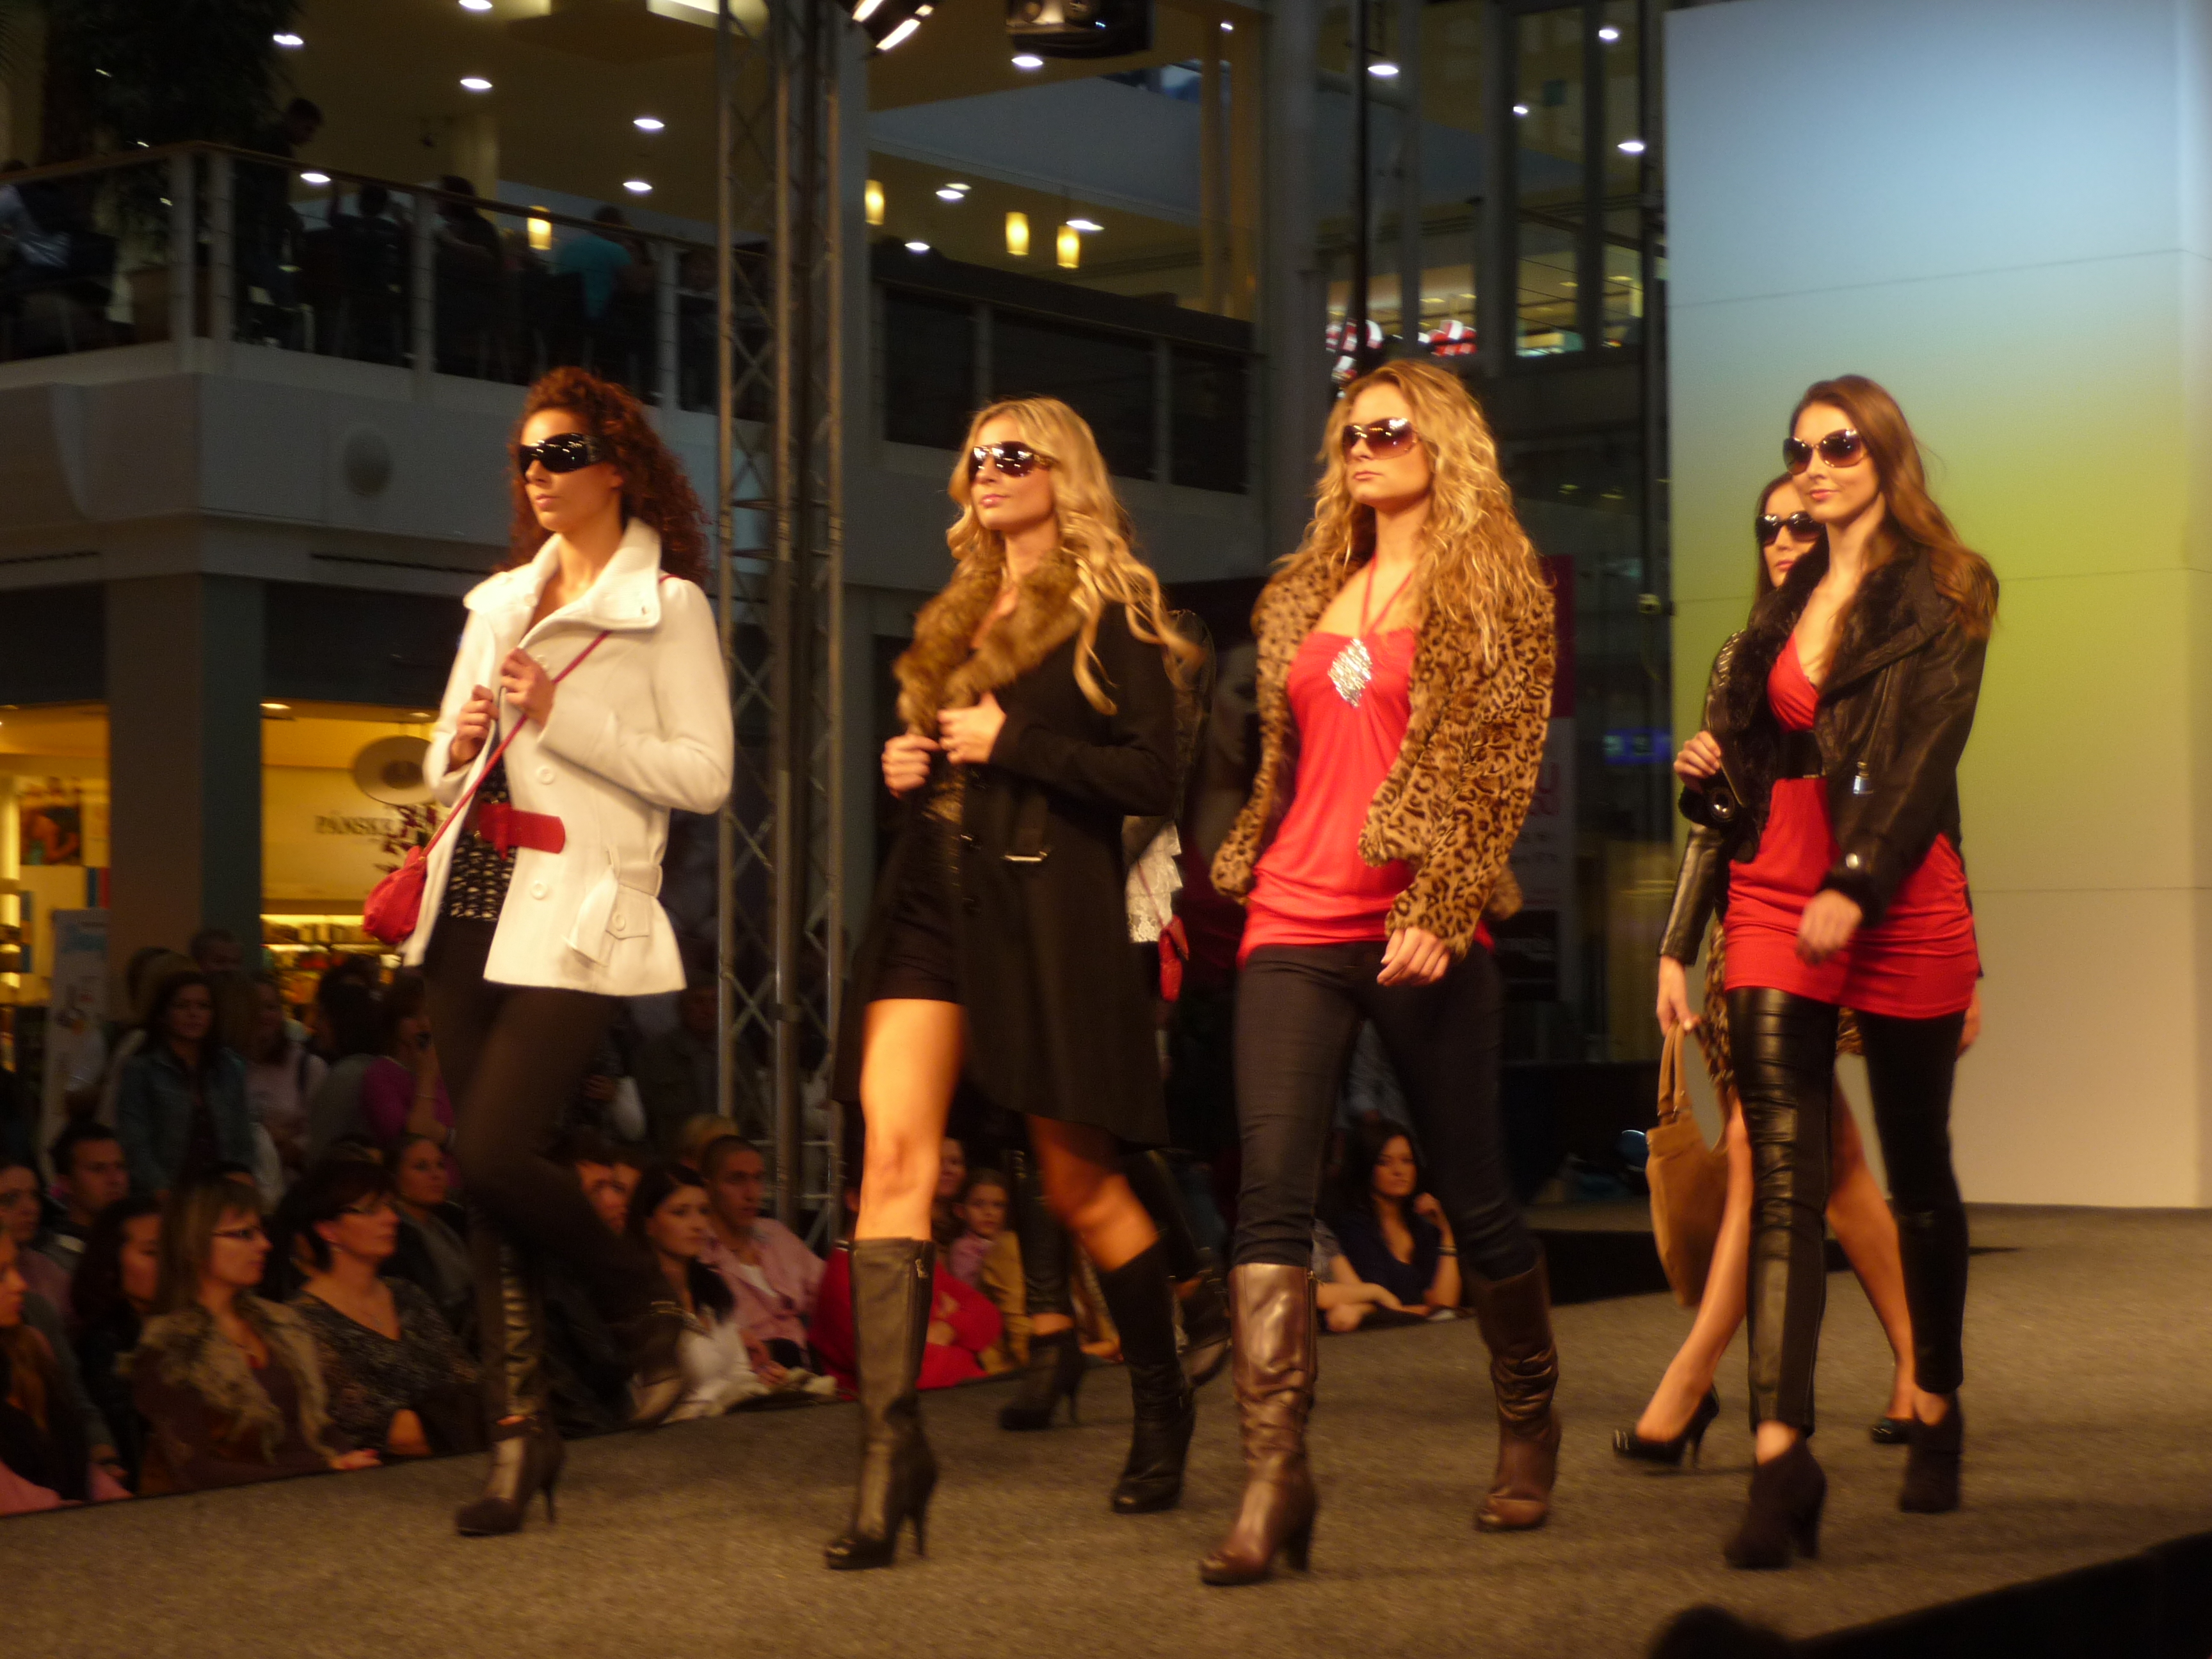 FileOlympia Fashion Show 2010 (22).jpg Wikimedia Commons